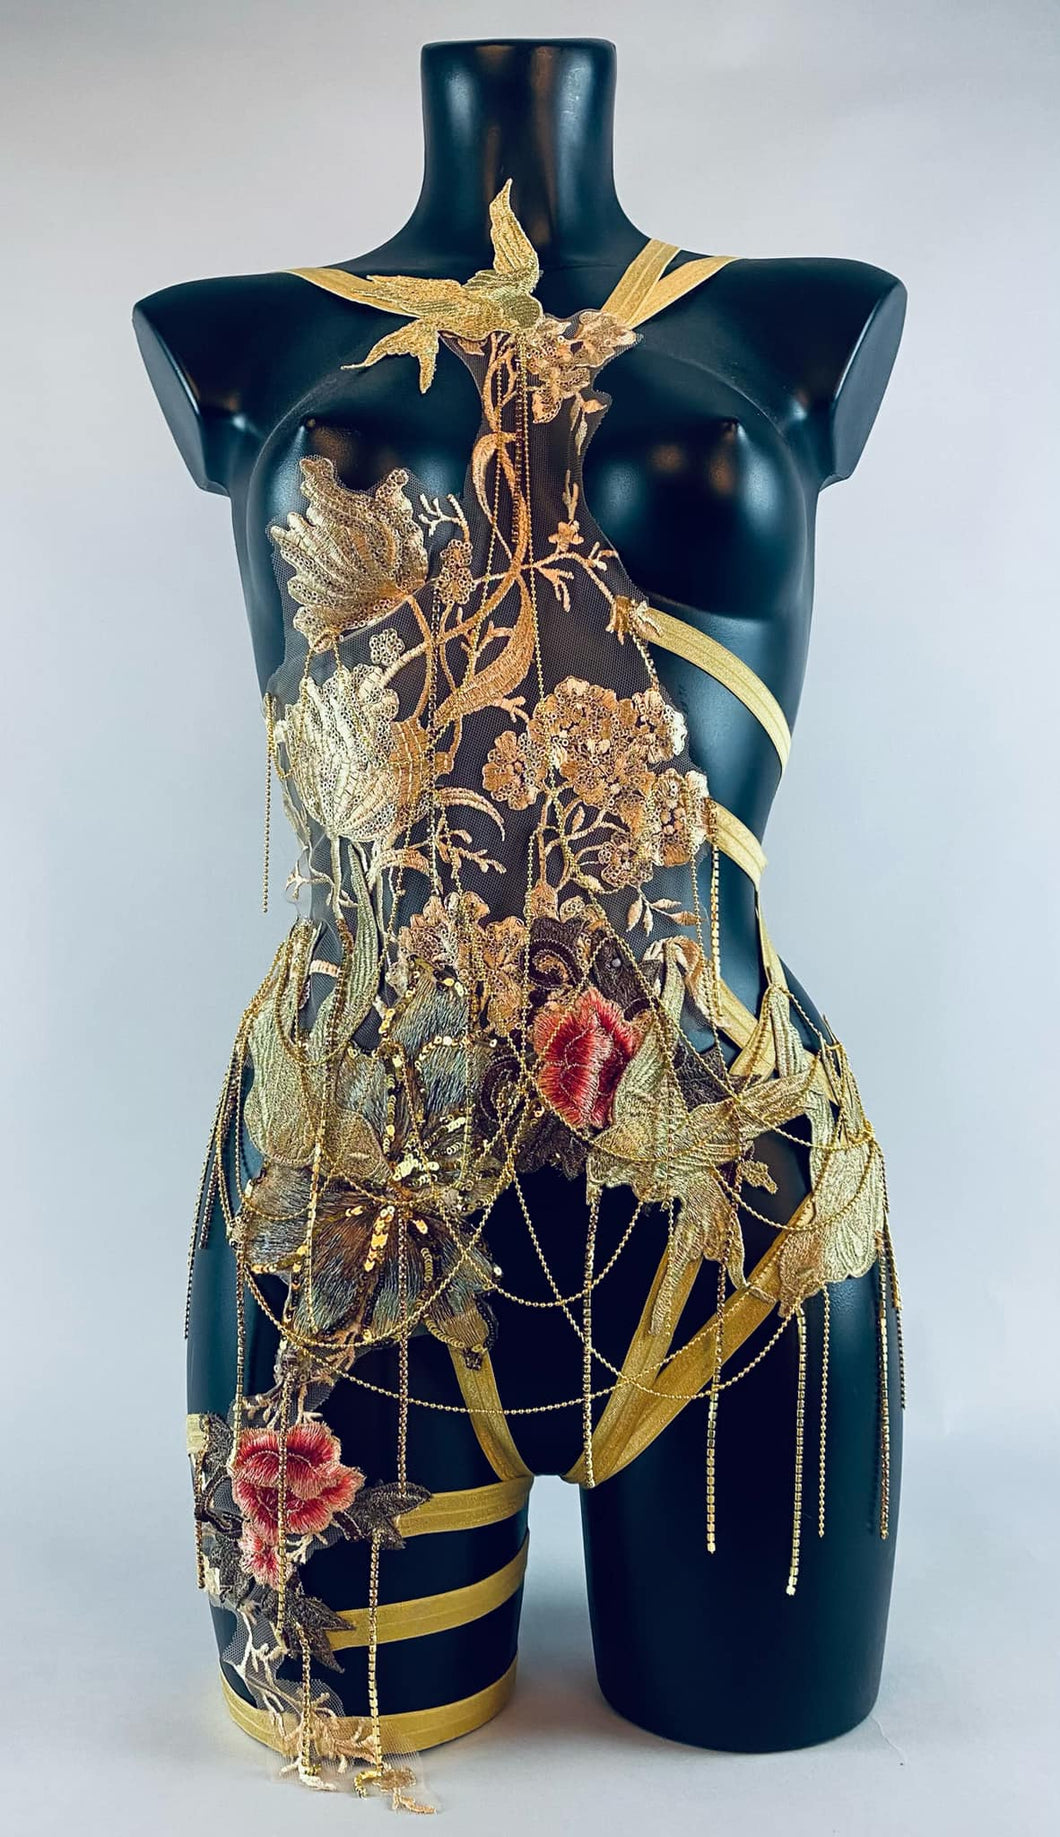 ARTEMISIA - Golden Lace & Rhinestone Chandelier Bodycage